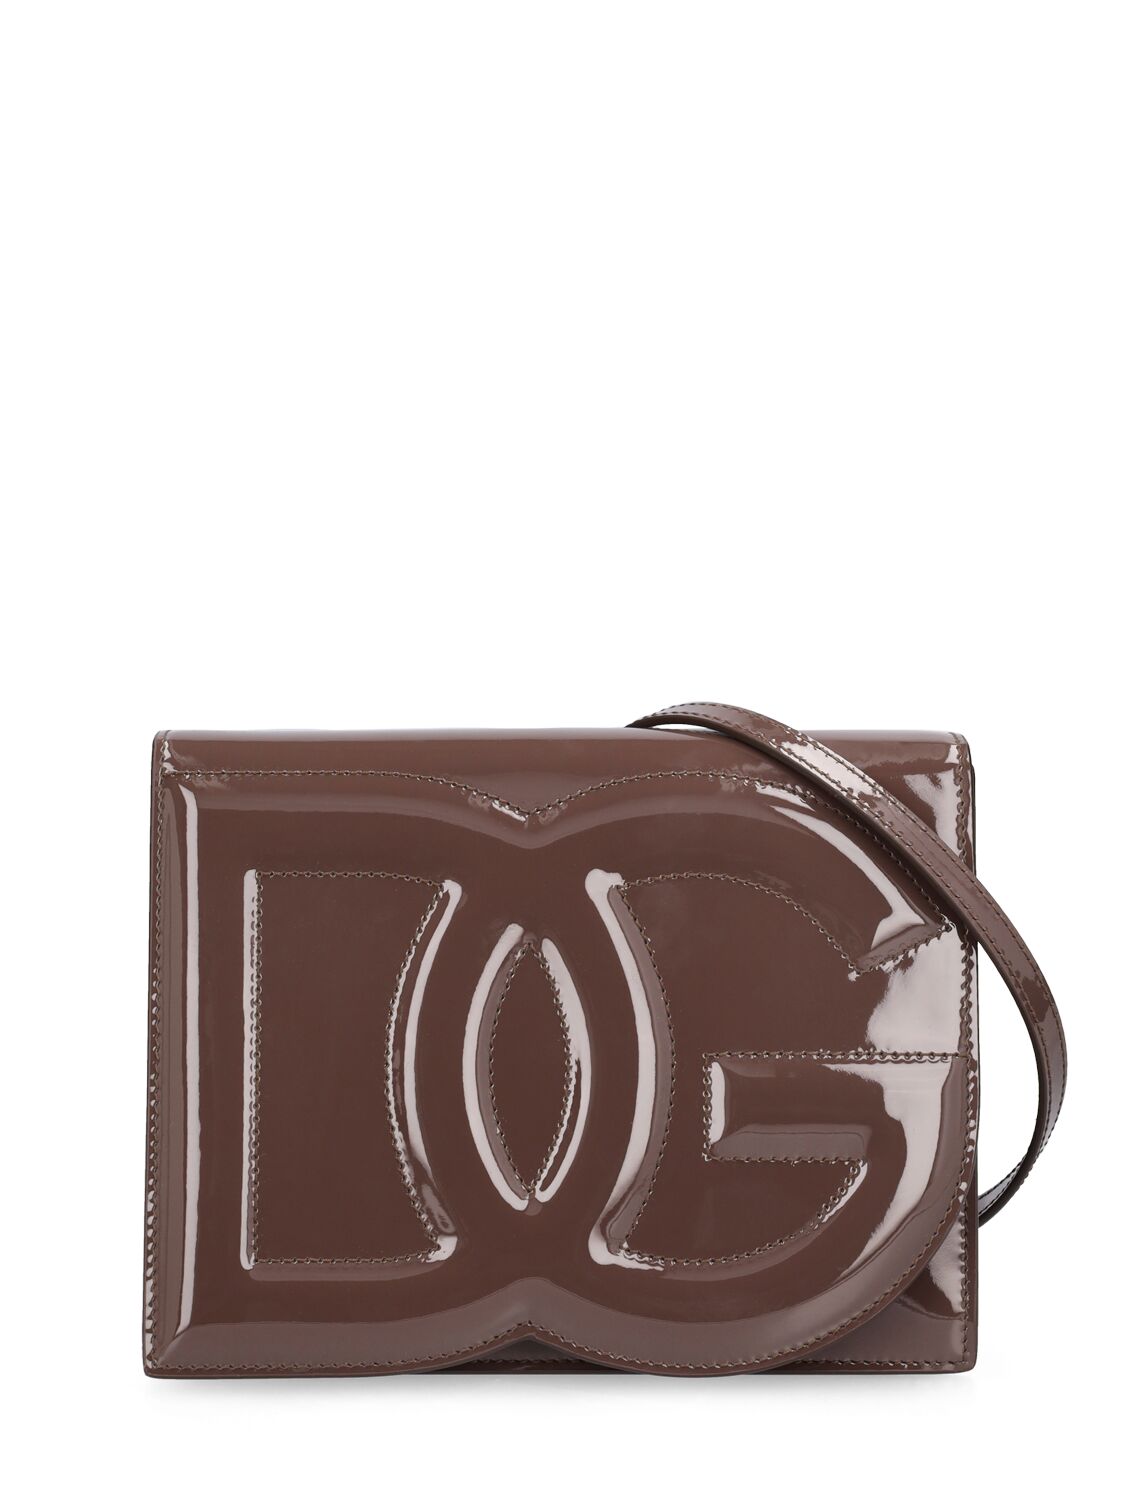 Dolce & Gabbana Logo Patent Leather Shoulder Bag In Fango